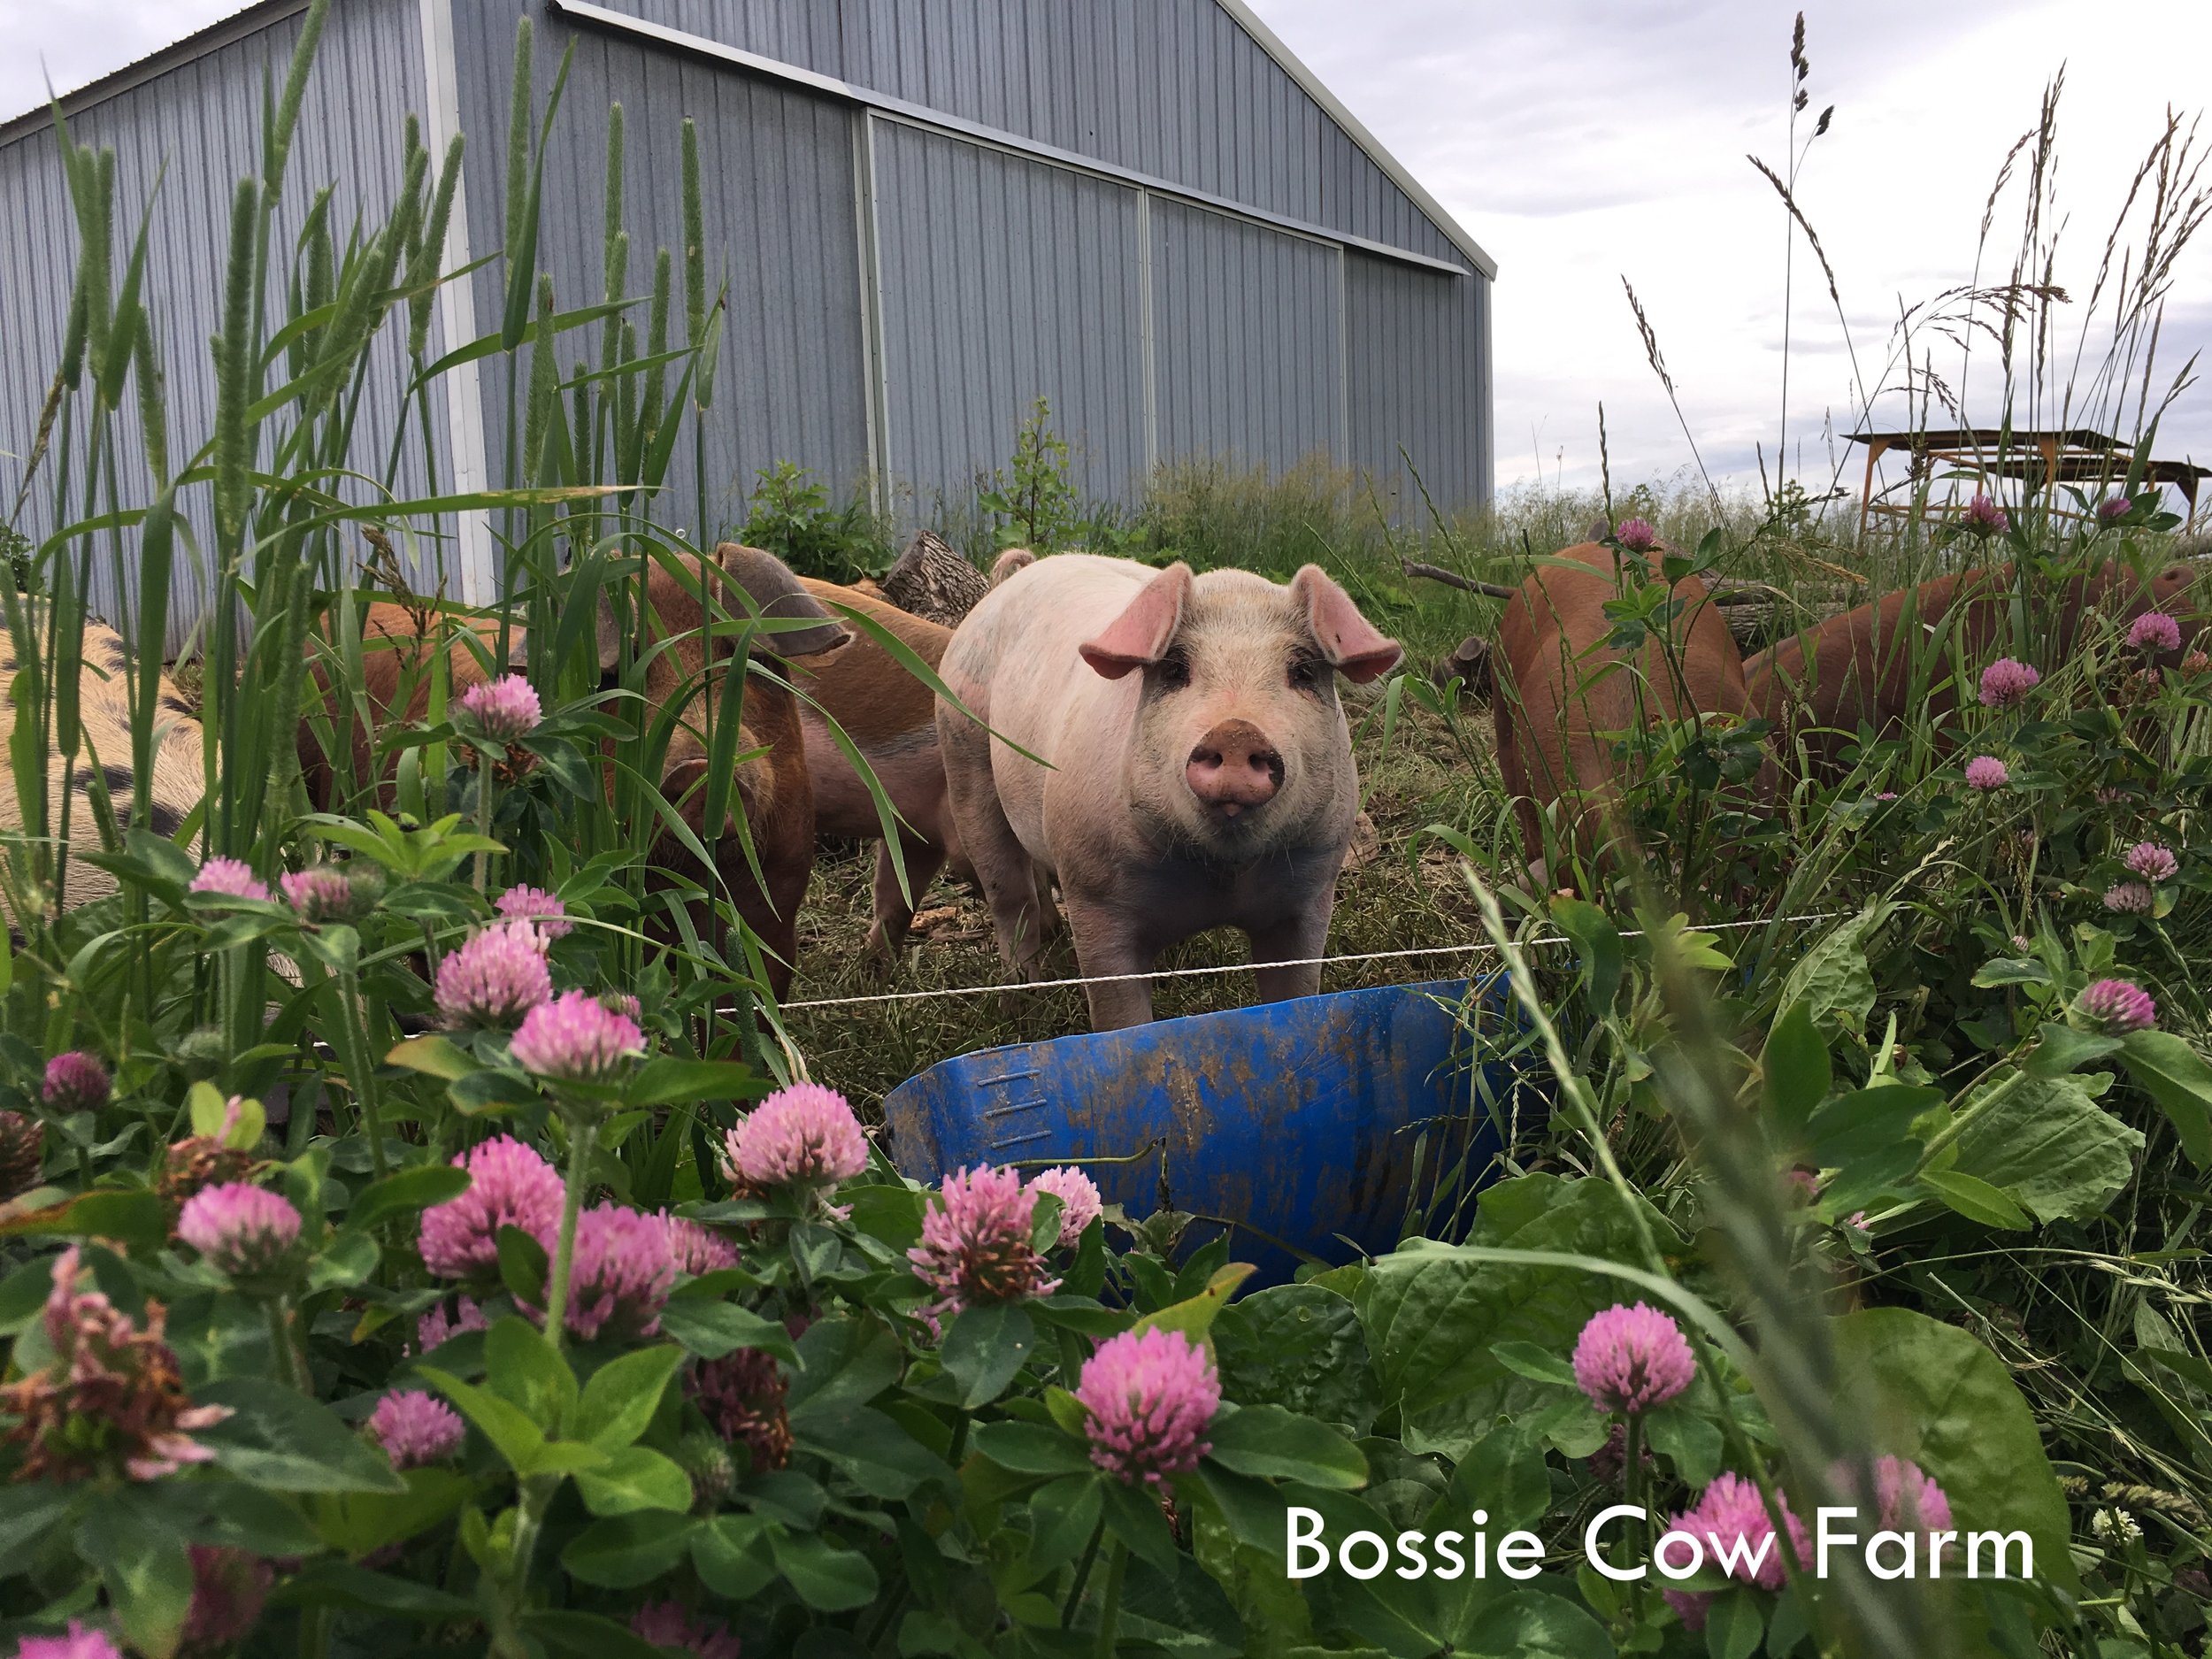 Pastured Pigs Bossie Cow Farm 2020 copy.JPG